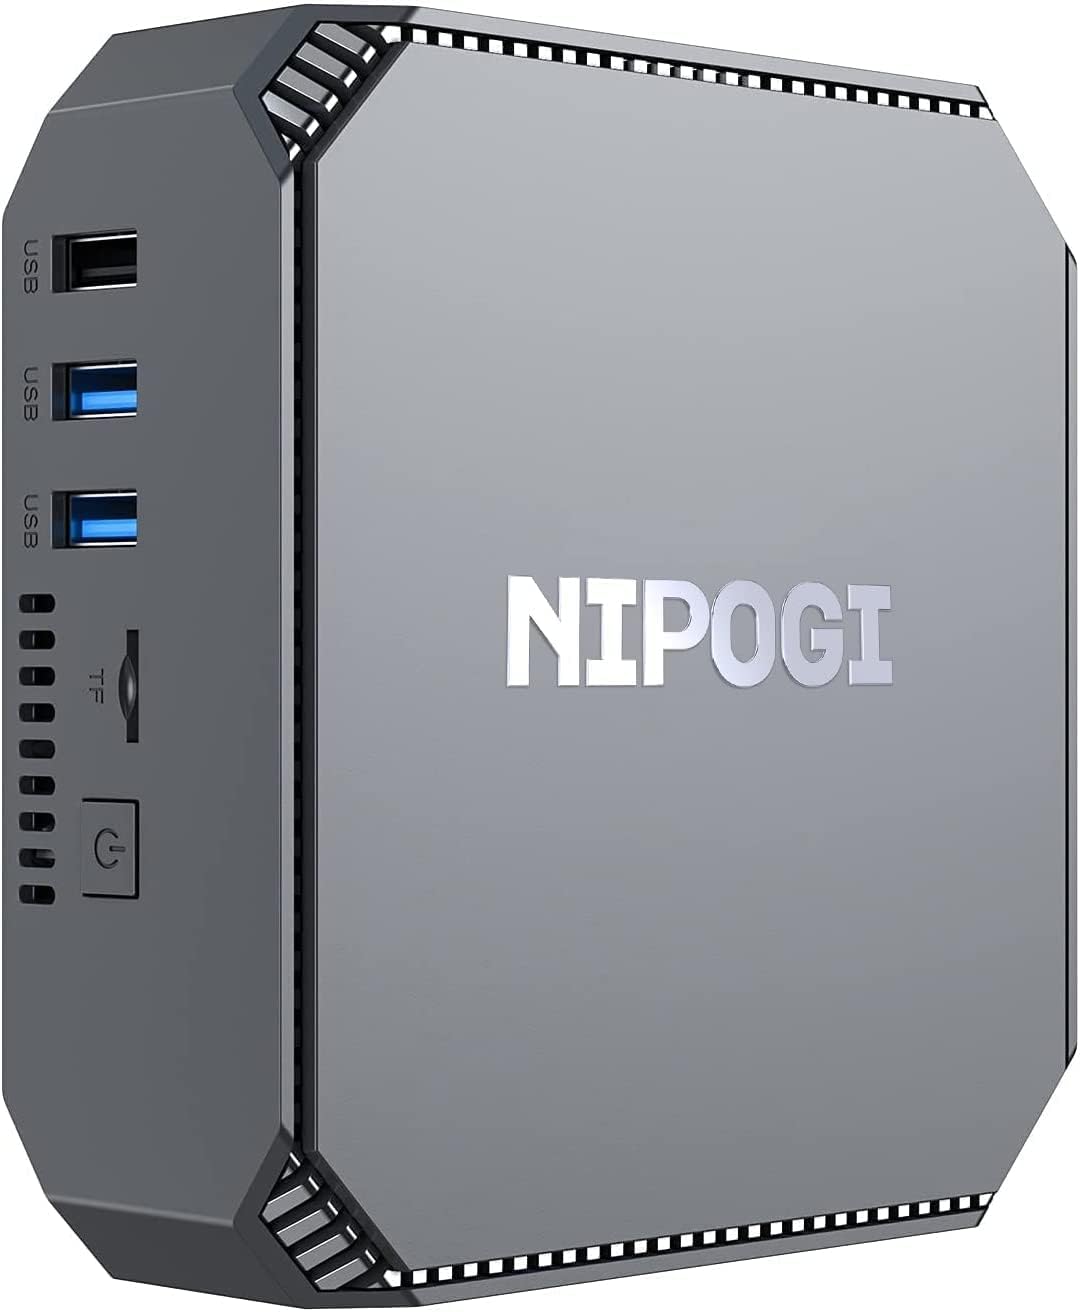 NiPoGi small form factor pc has 4 ways to expand the storage